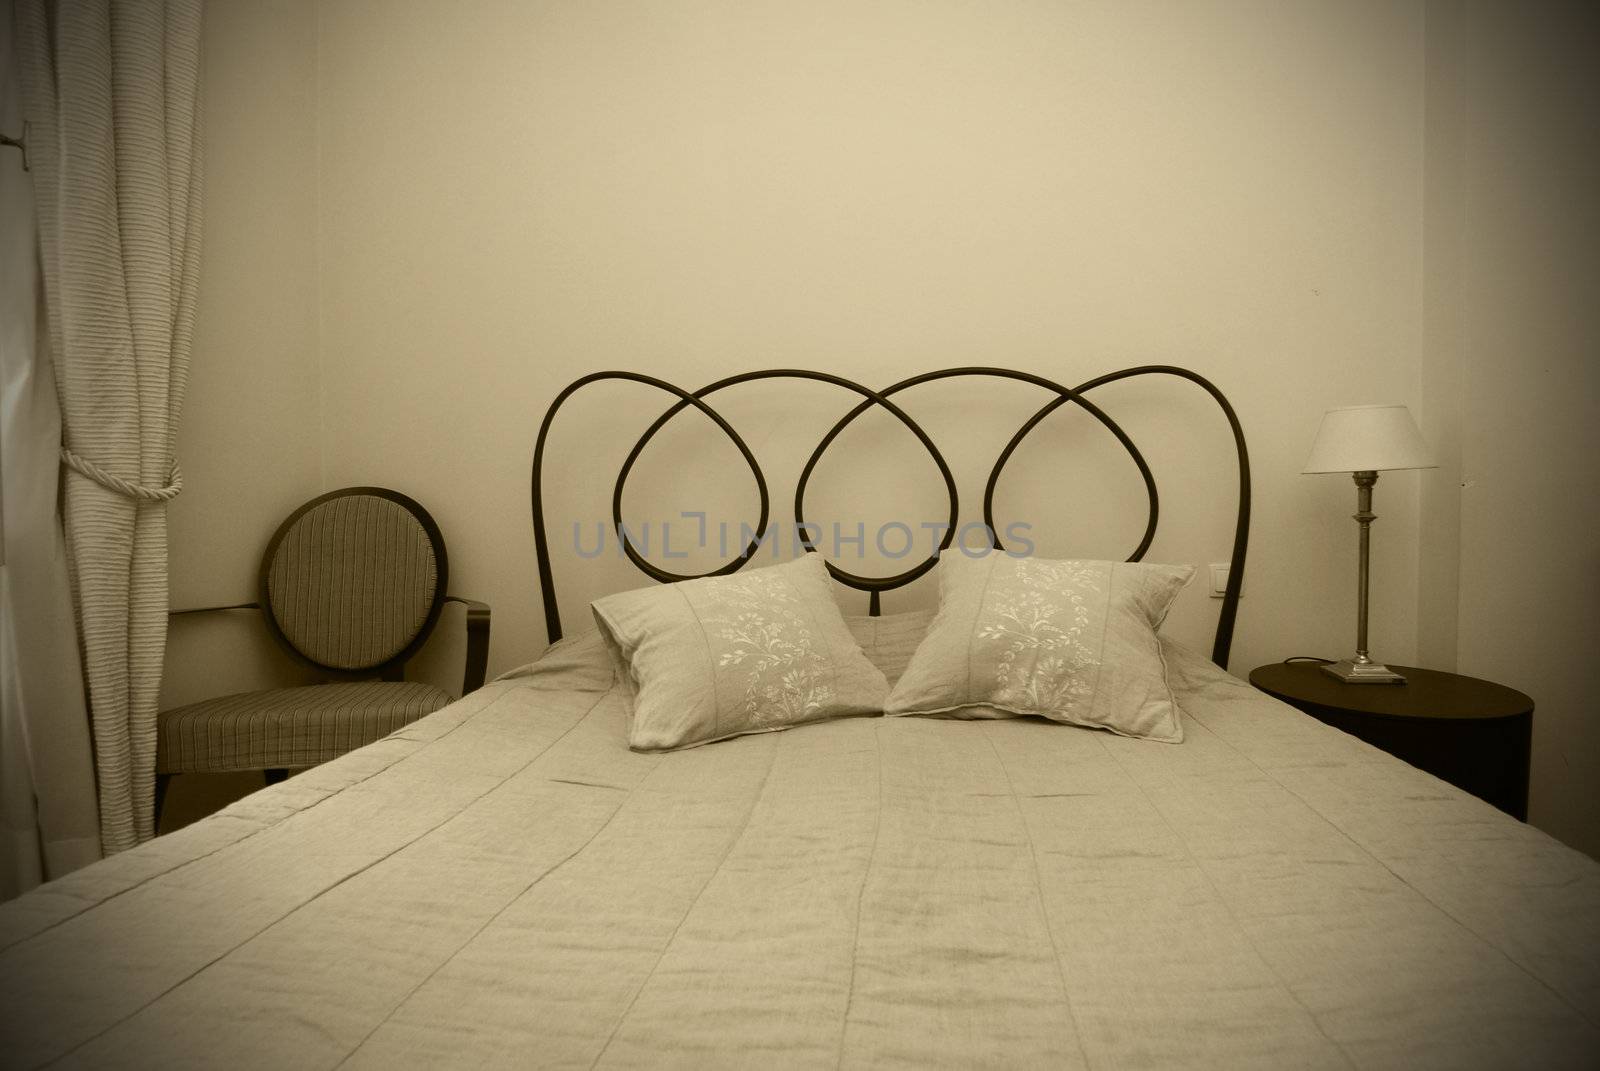 vintage bedroom by sarkao